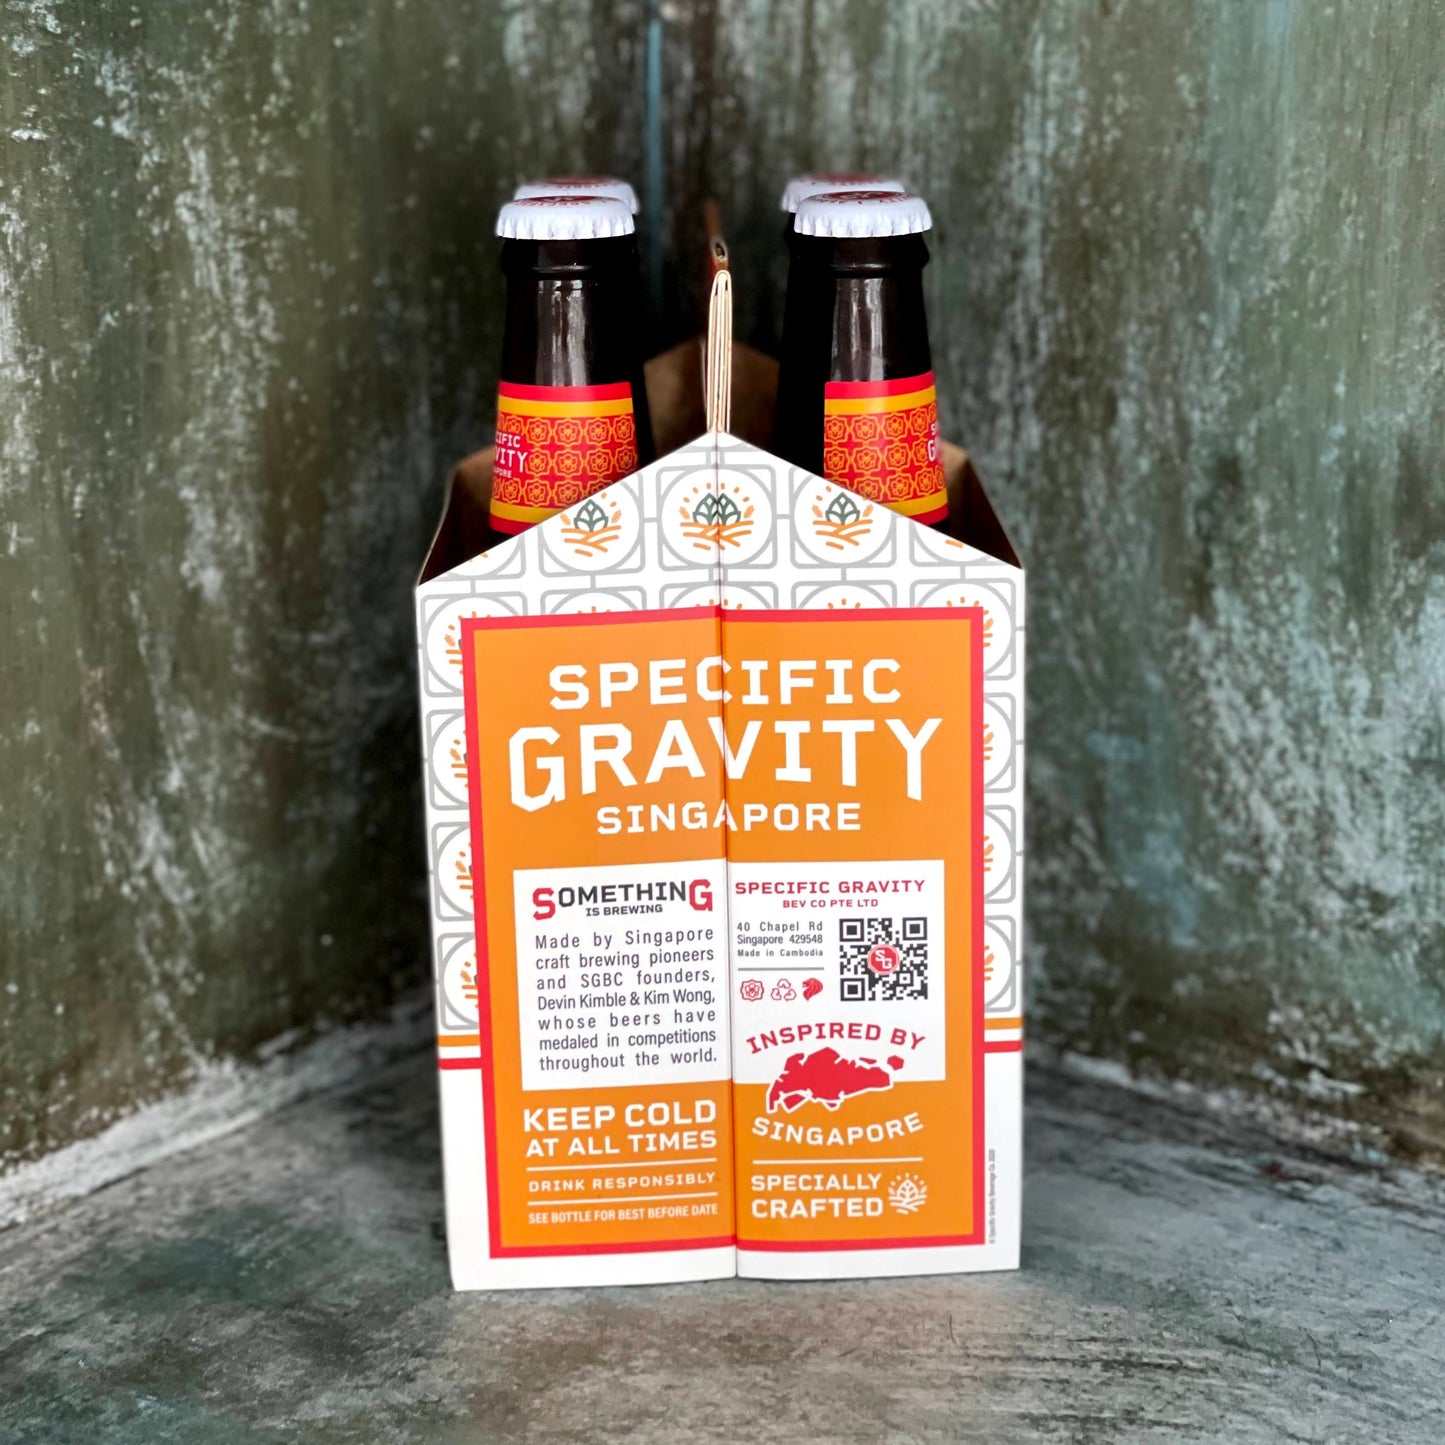 Specific Gravity Golden Ale